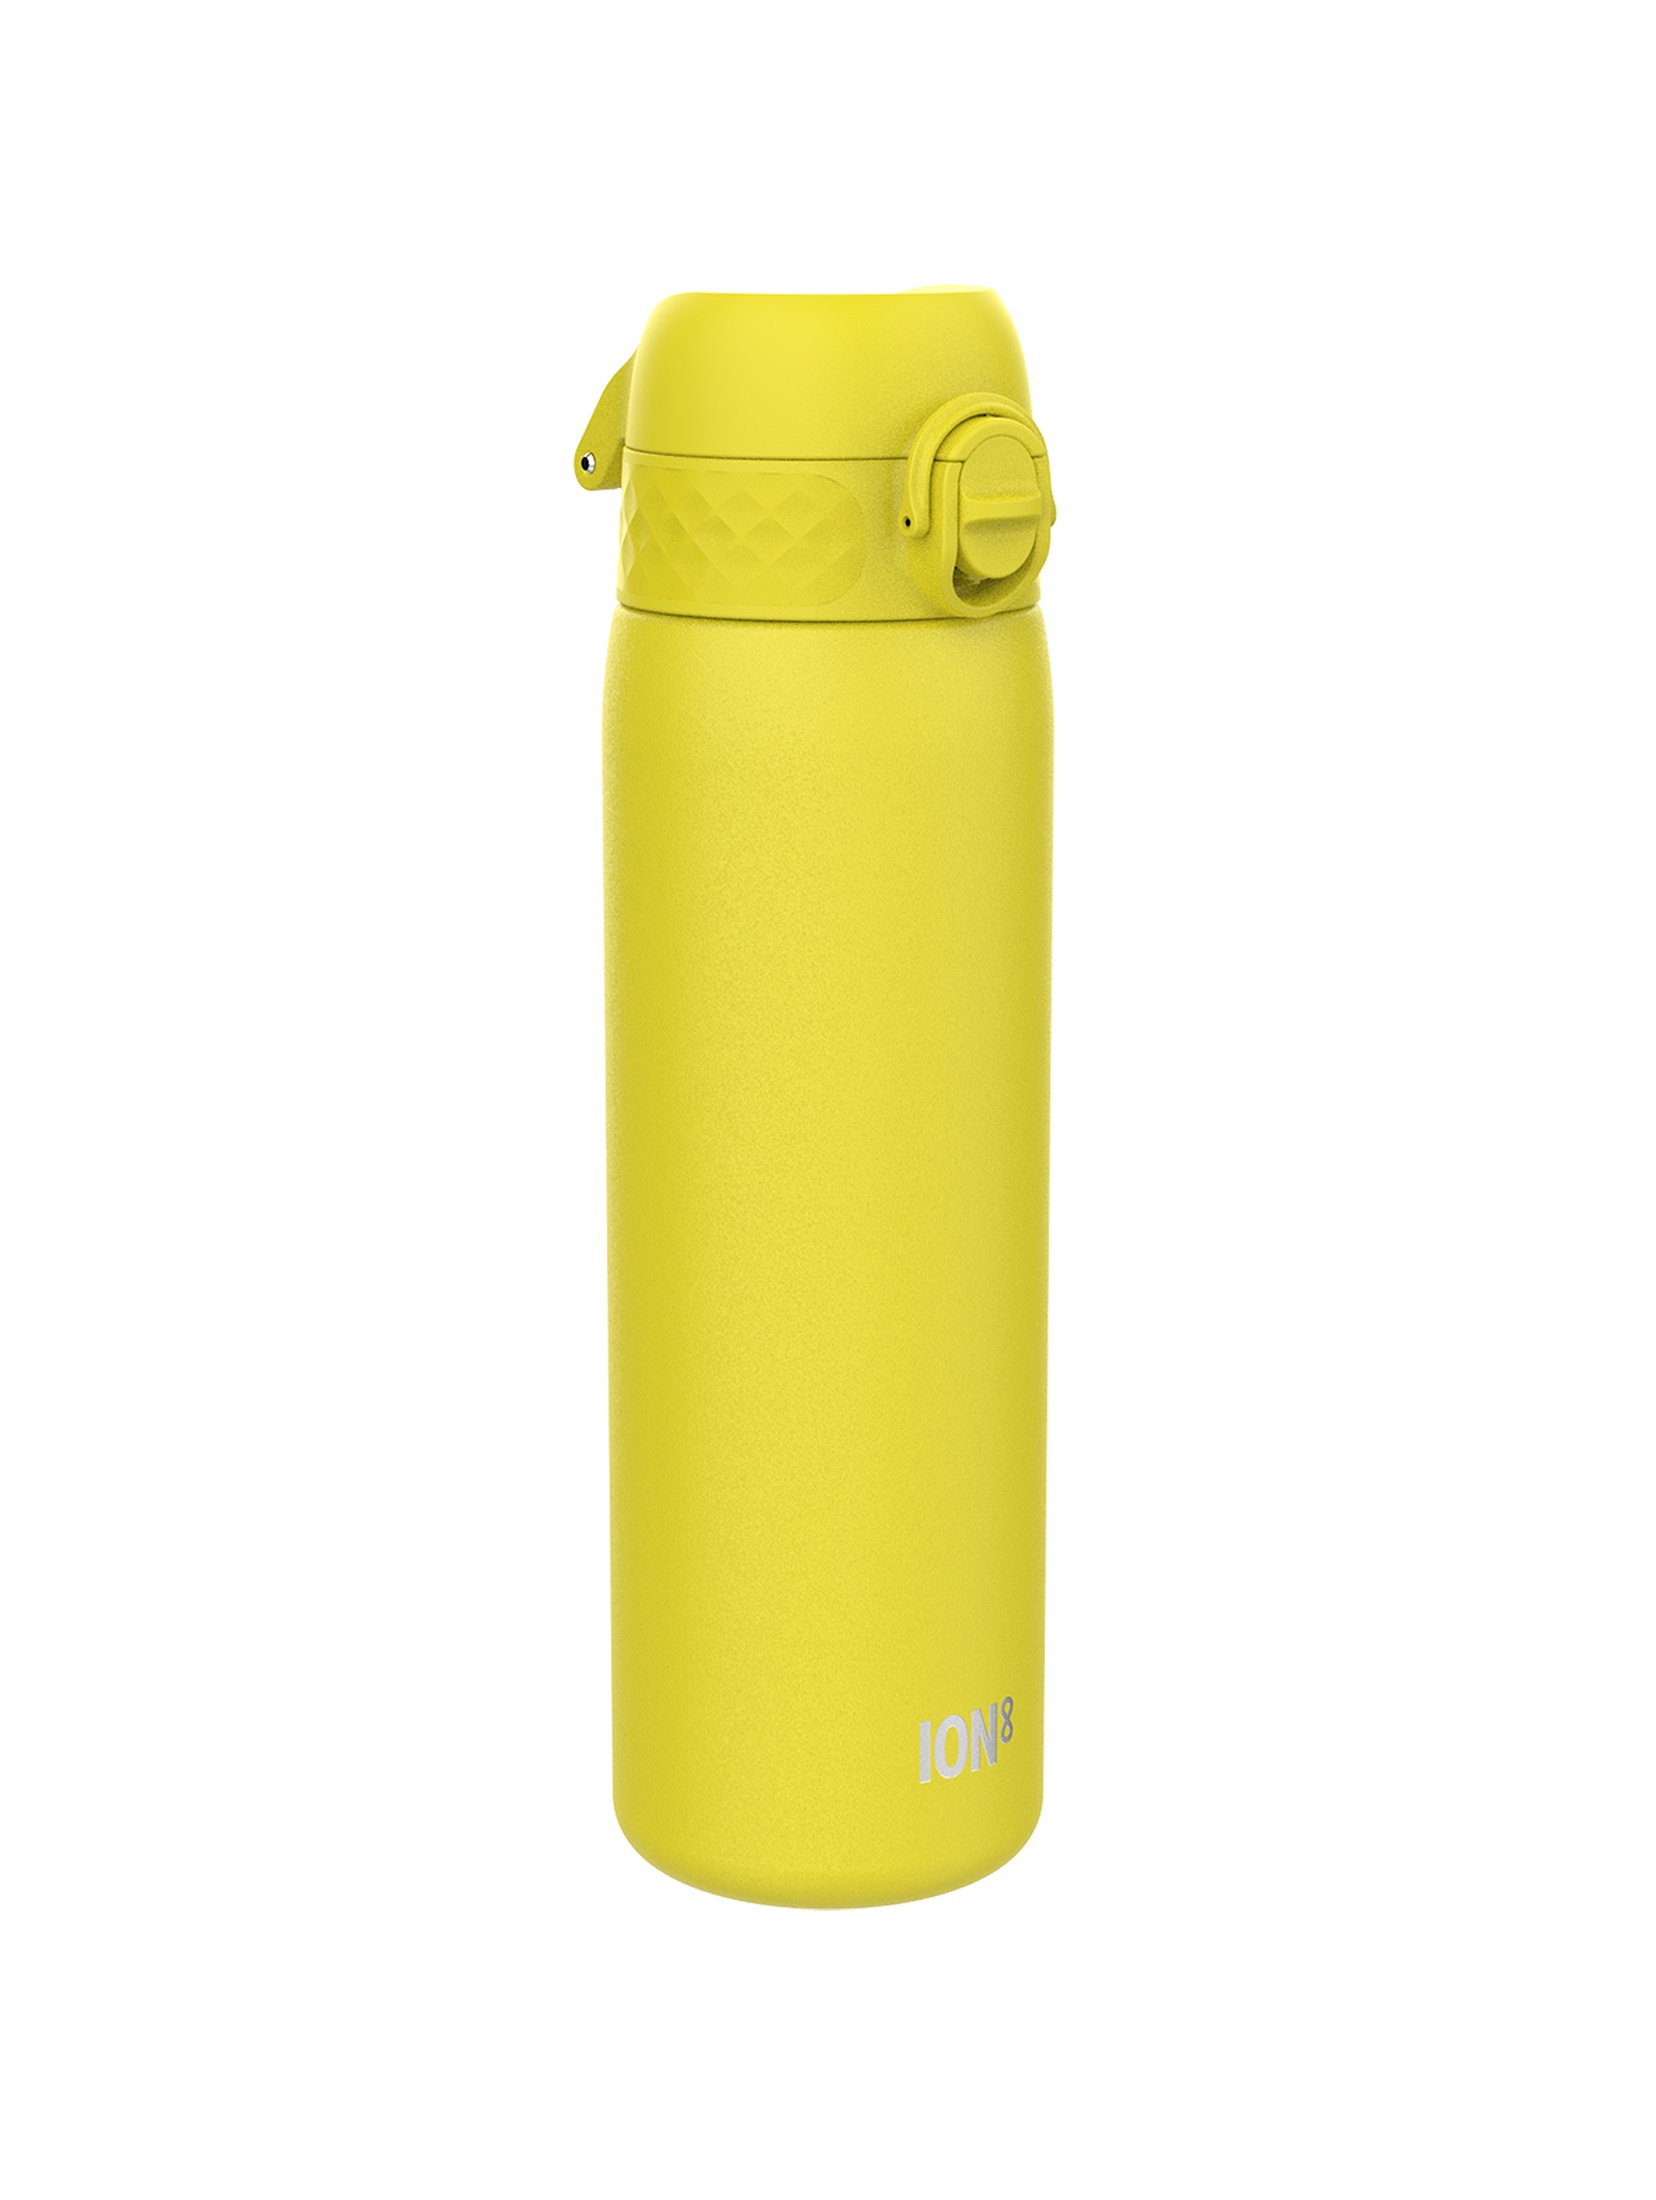 Butelka na wodę ION8 Double Wall Yellow 500ml - żółta